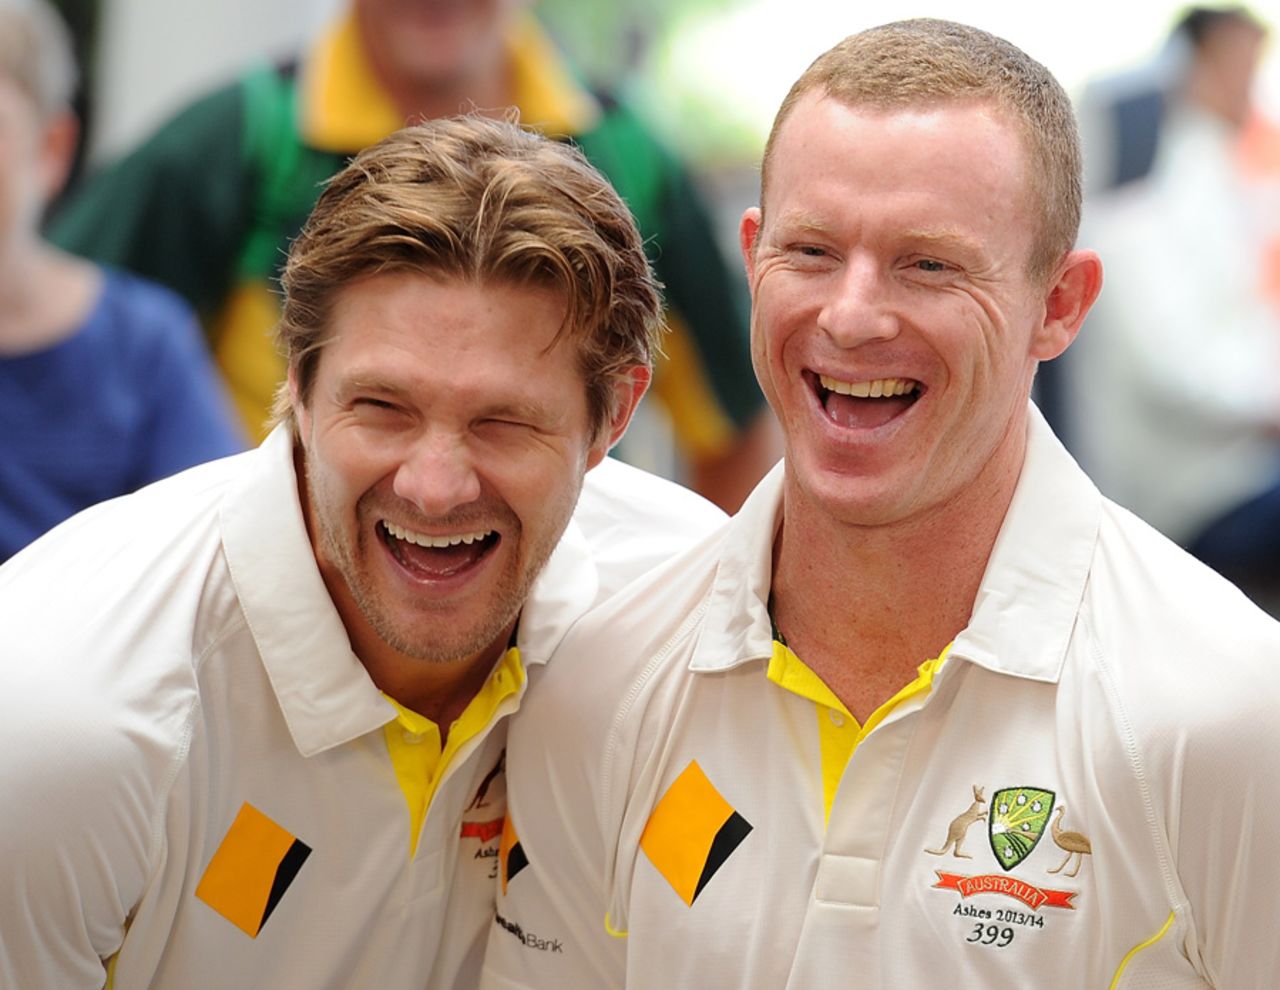 Shane Watson and Chris Rogers are in splits, Brisbane, November 18, 2013